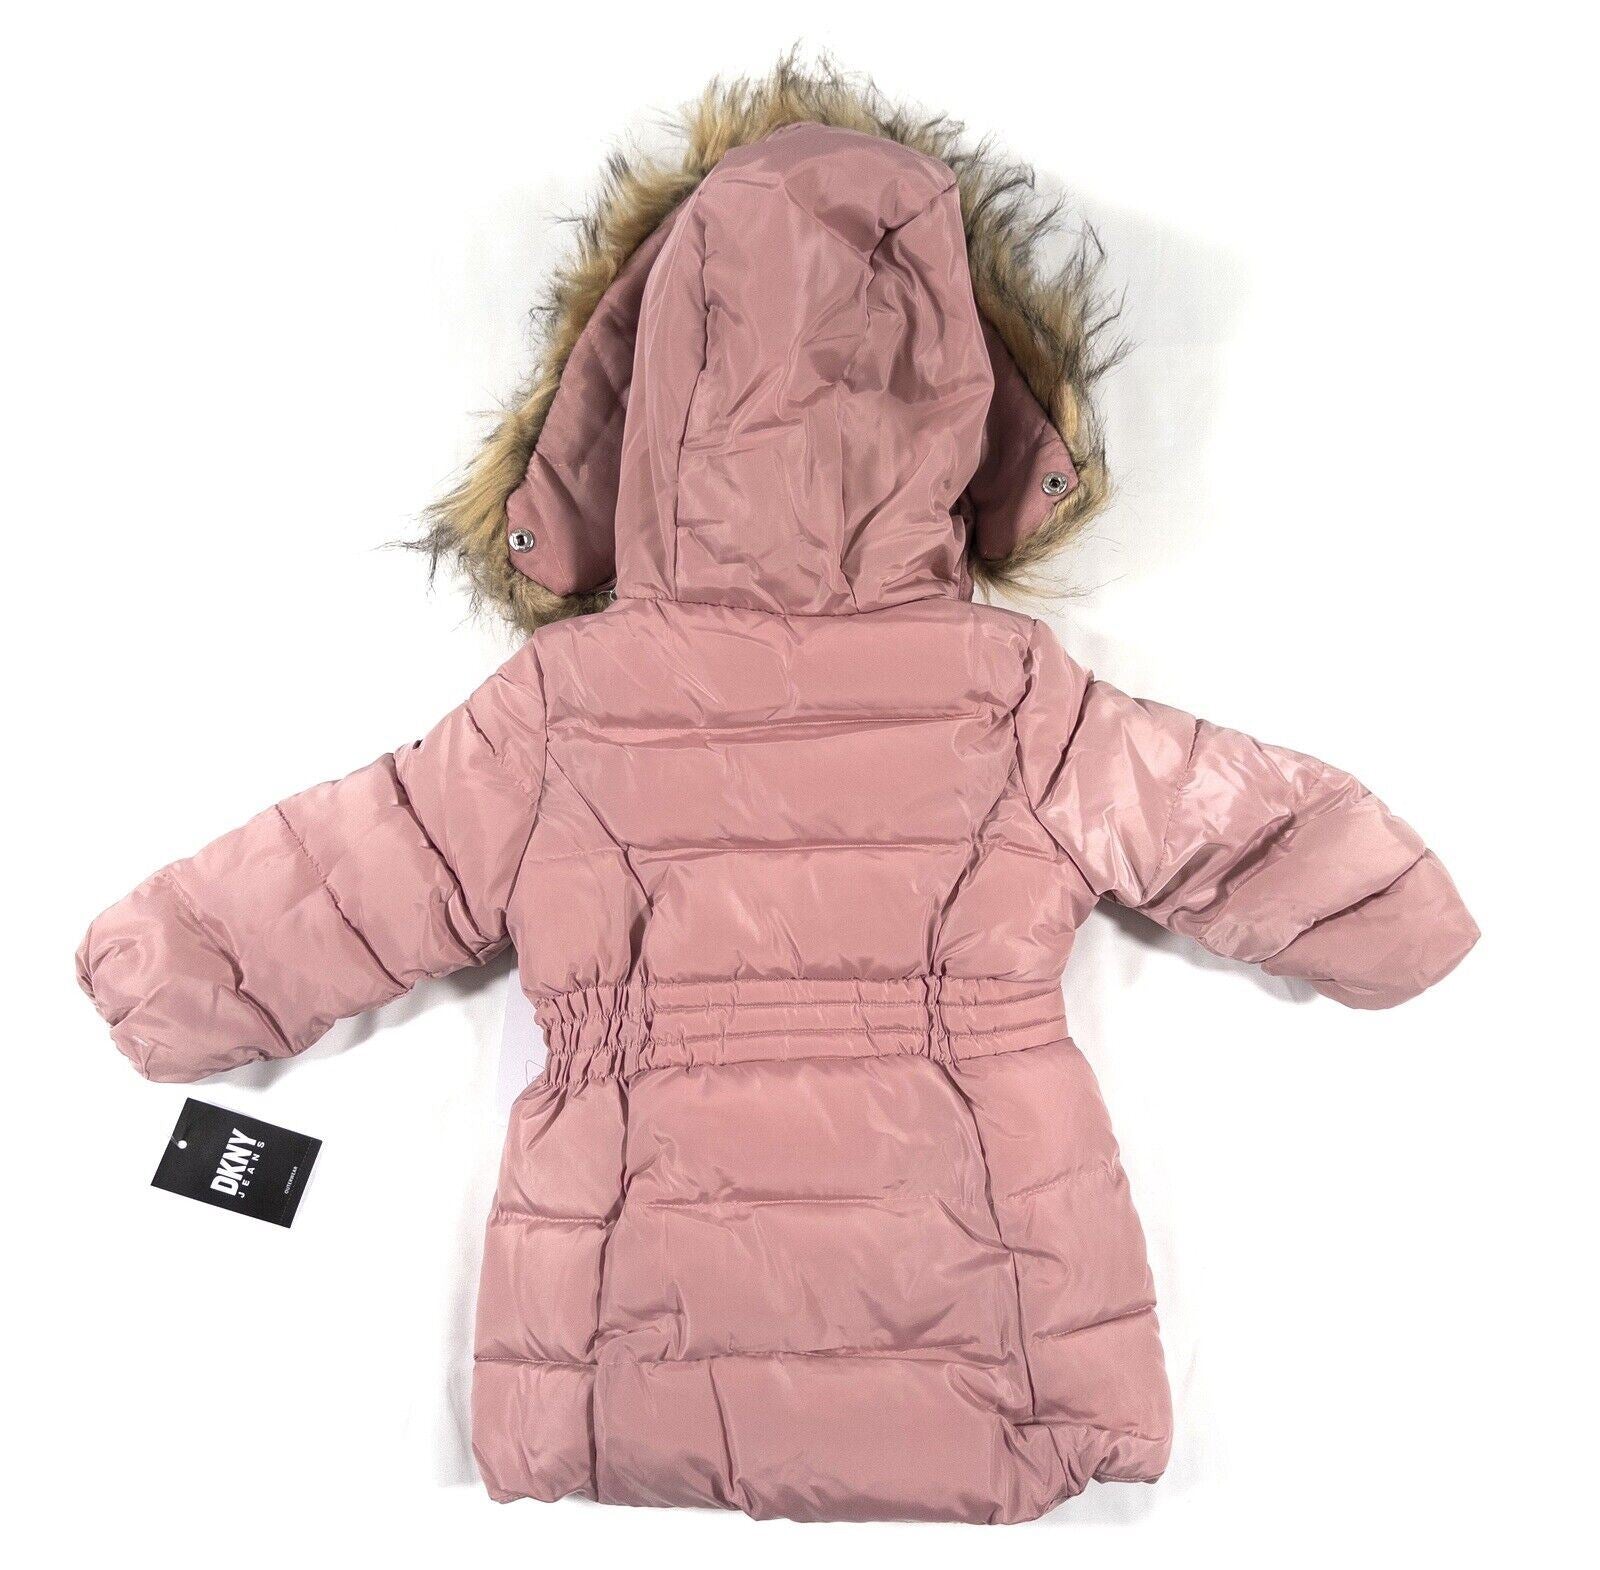 DKNY JEANS Infant Girls Hooded Pink Coat Mid Length Size UK 18 Months